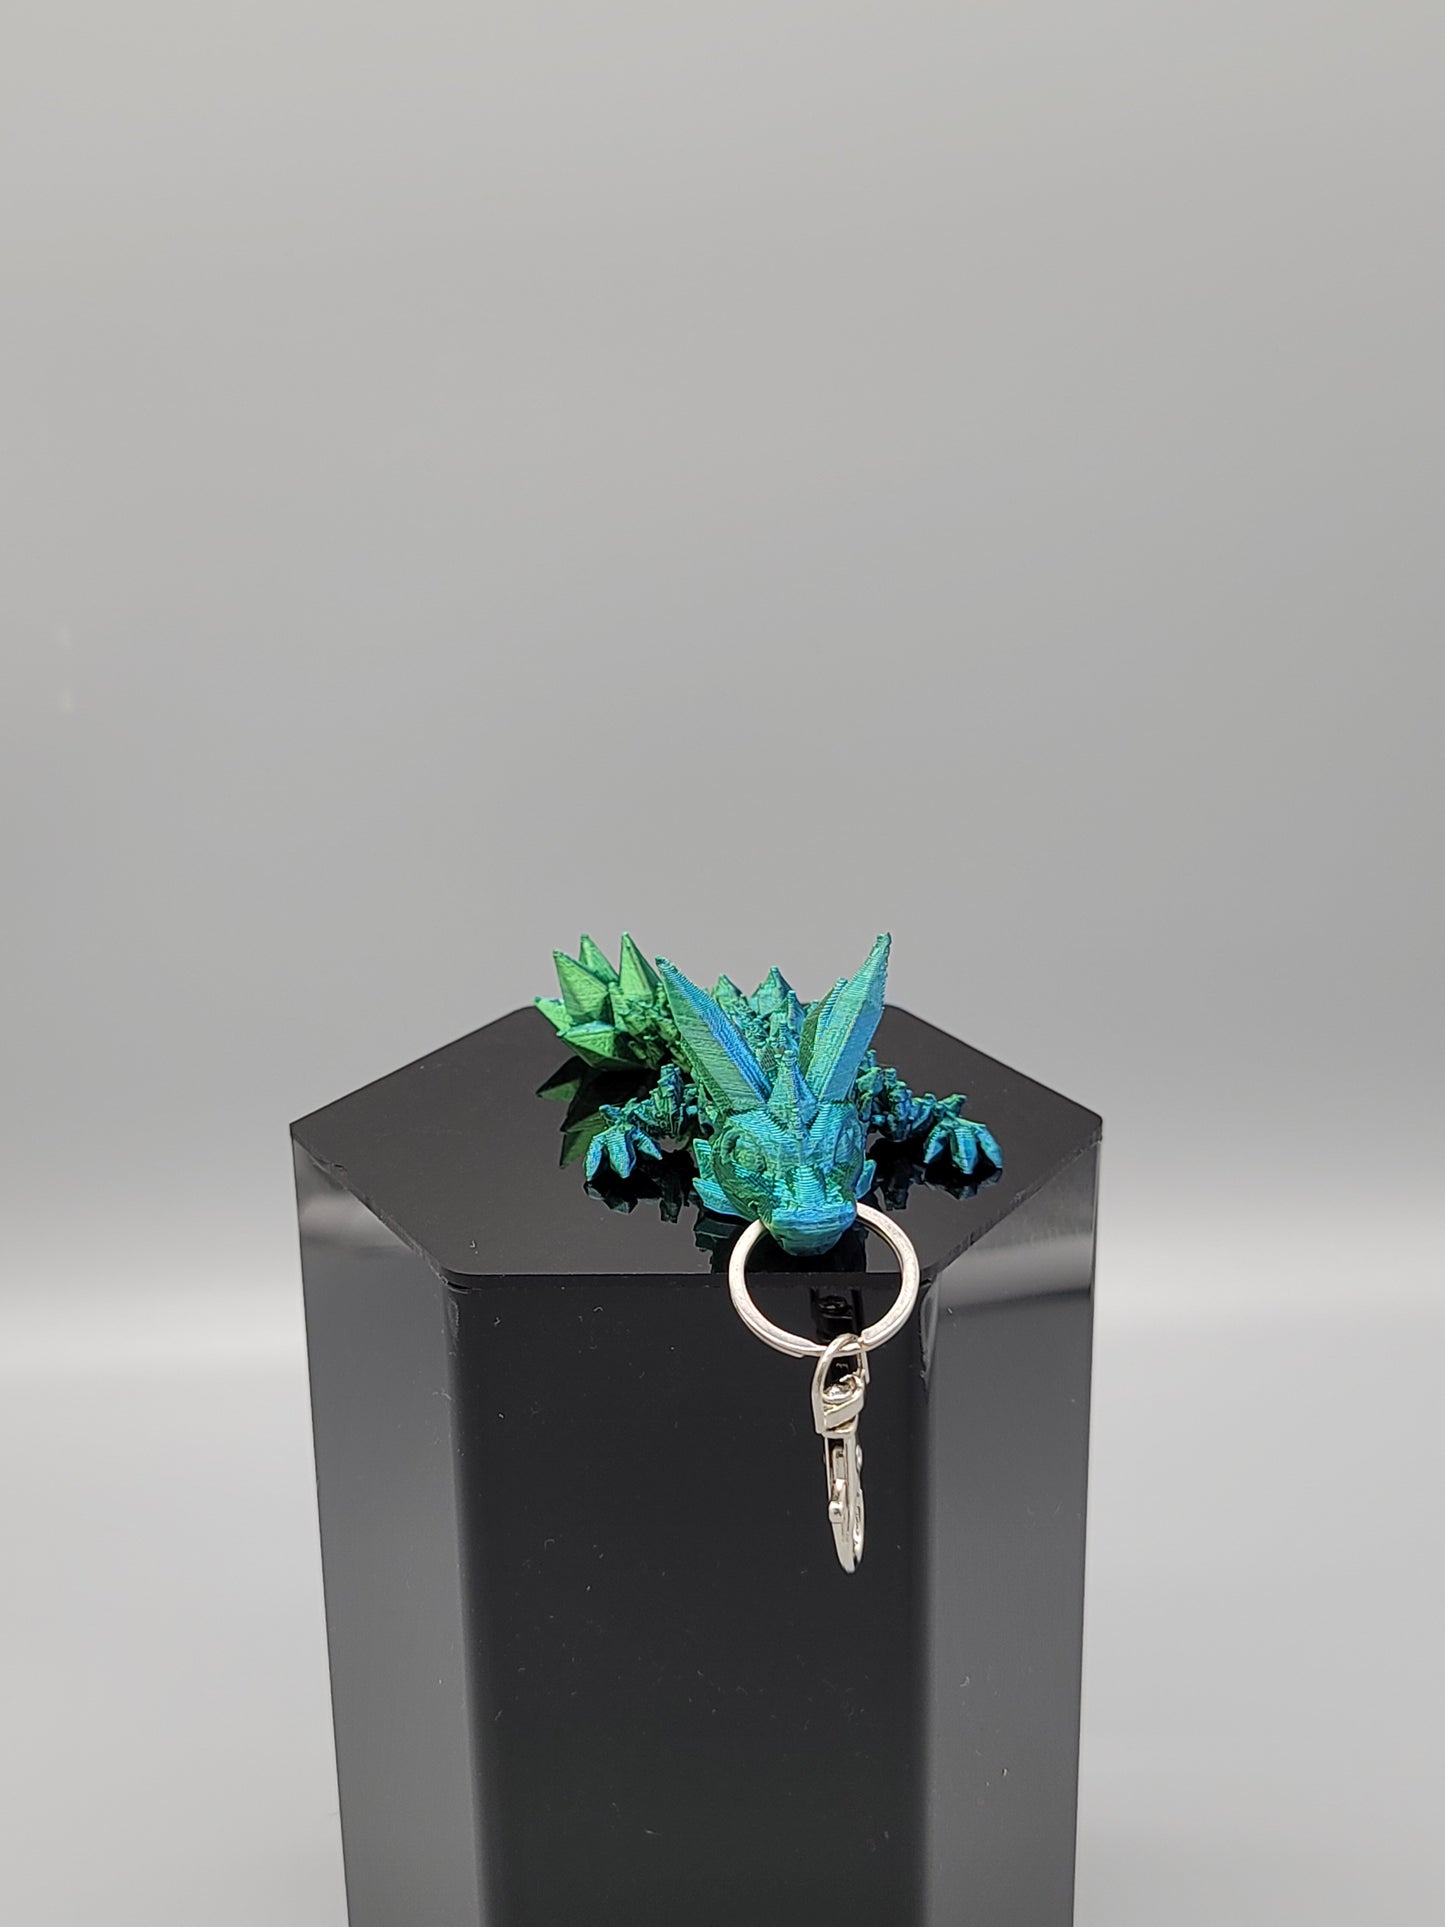 Mini Crystal Dragon keychain